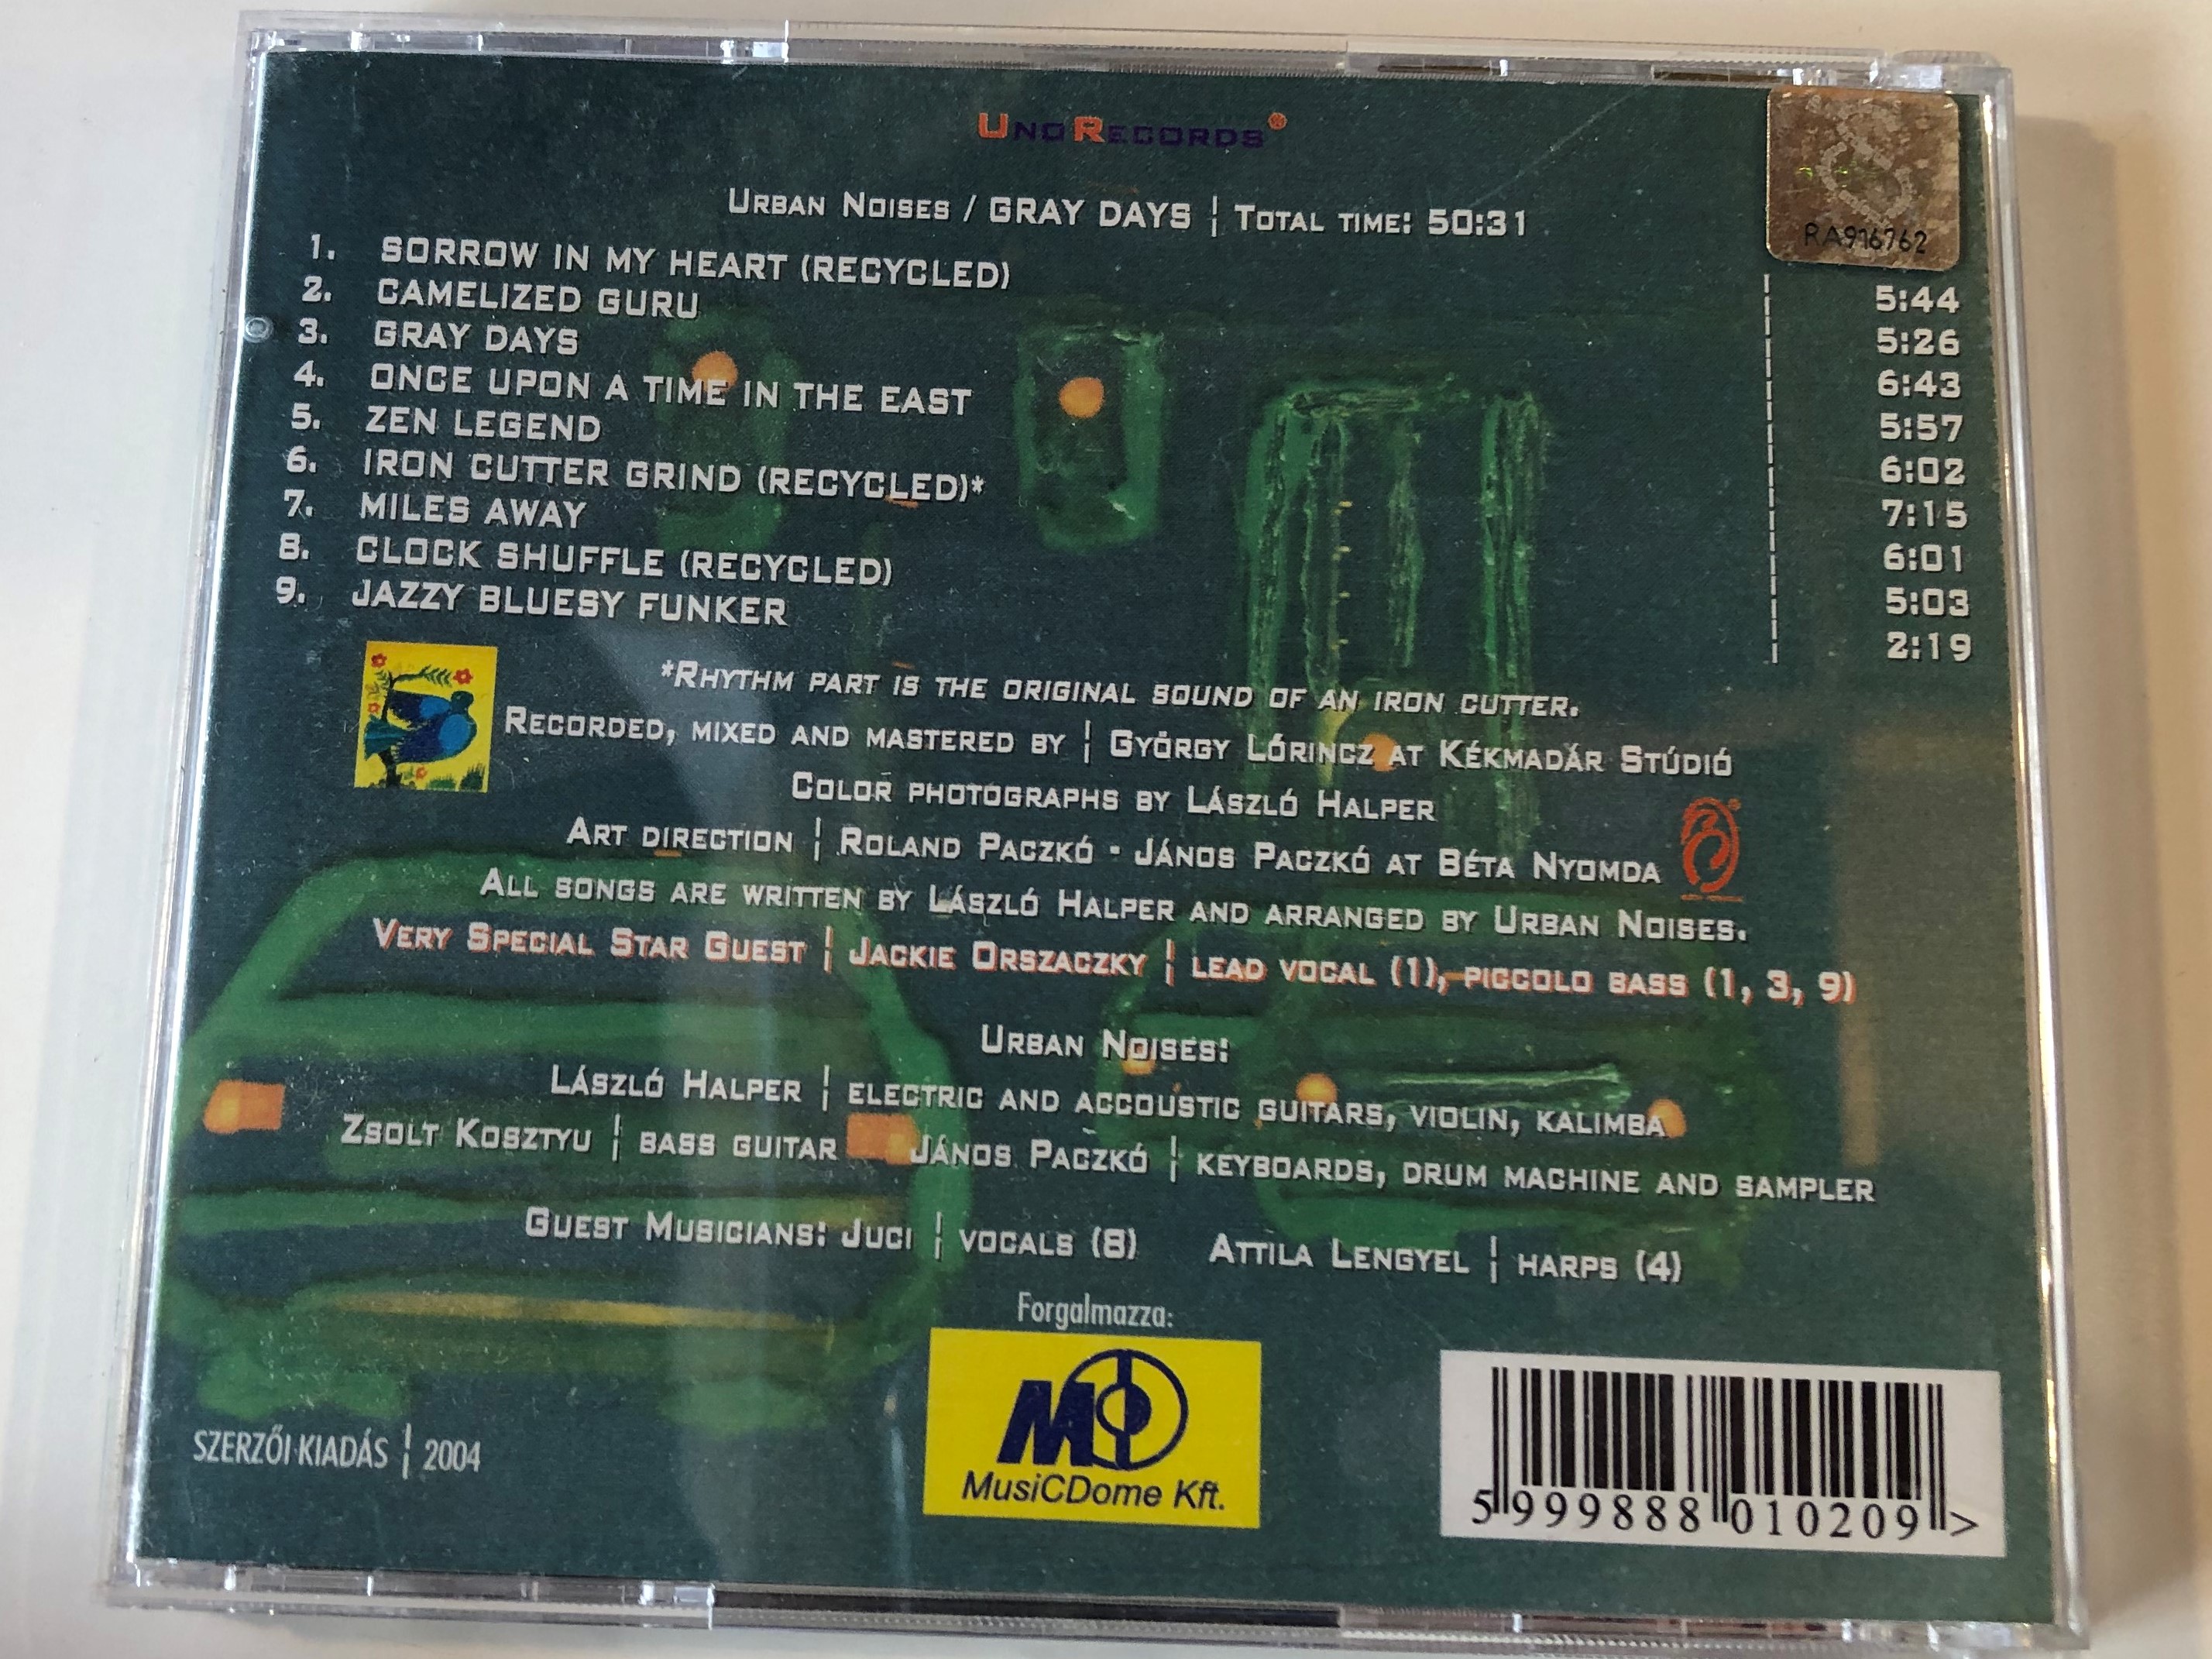 urban-noises-featuring-jackie-orszaczky-gray-days-uno-records-audio-cd-2004-5999888010209-4-.jpg